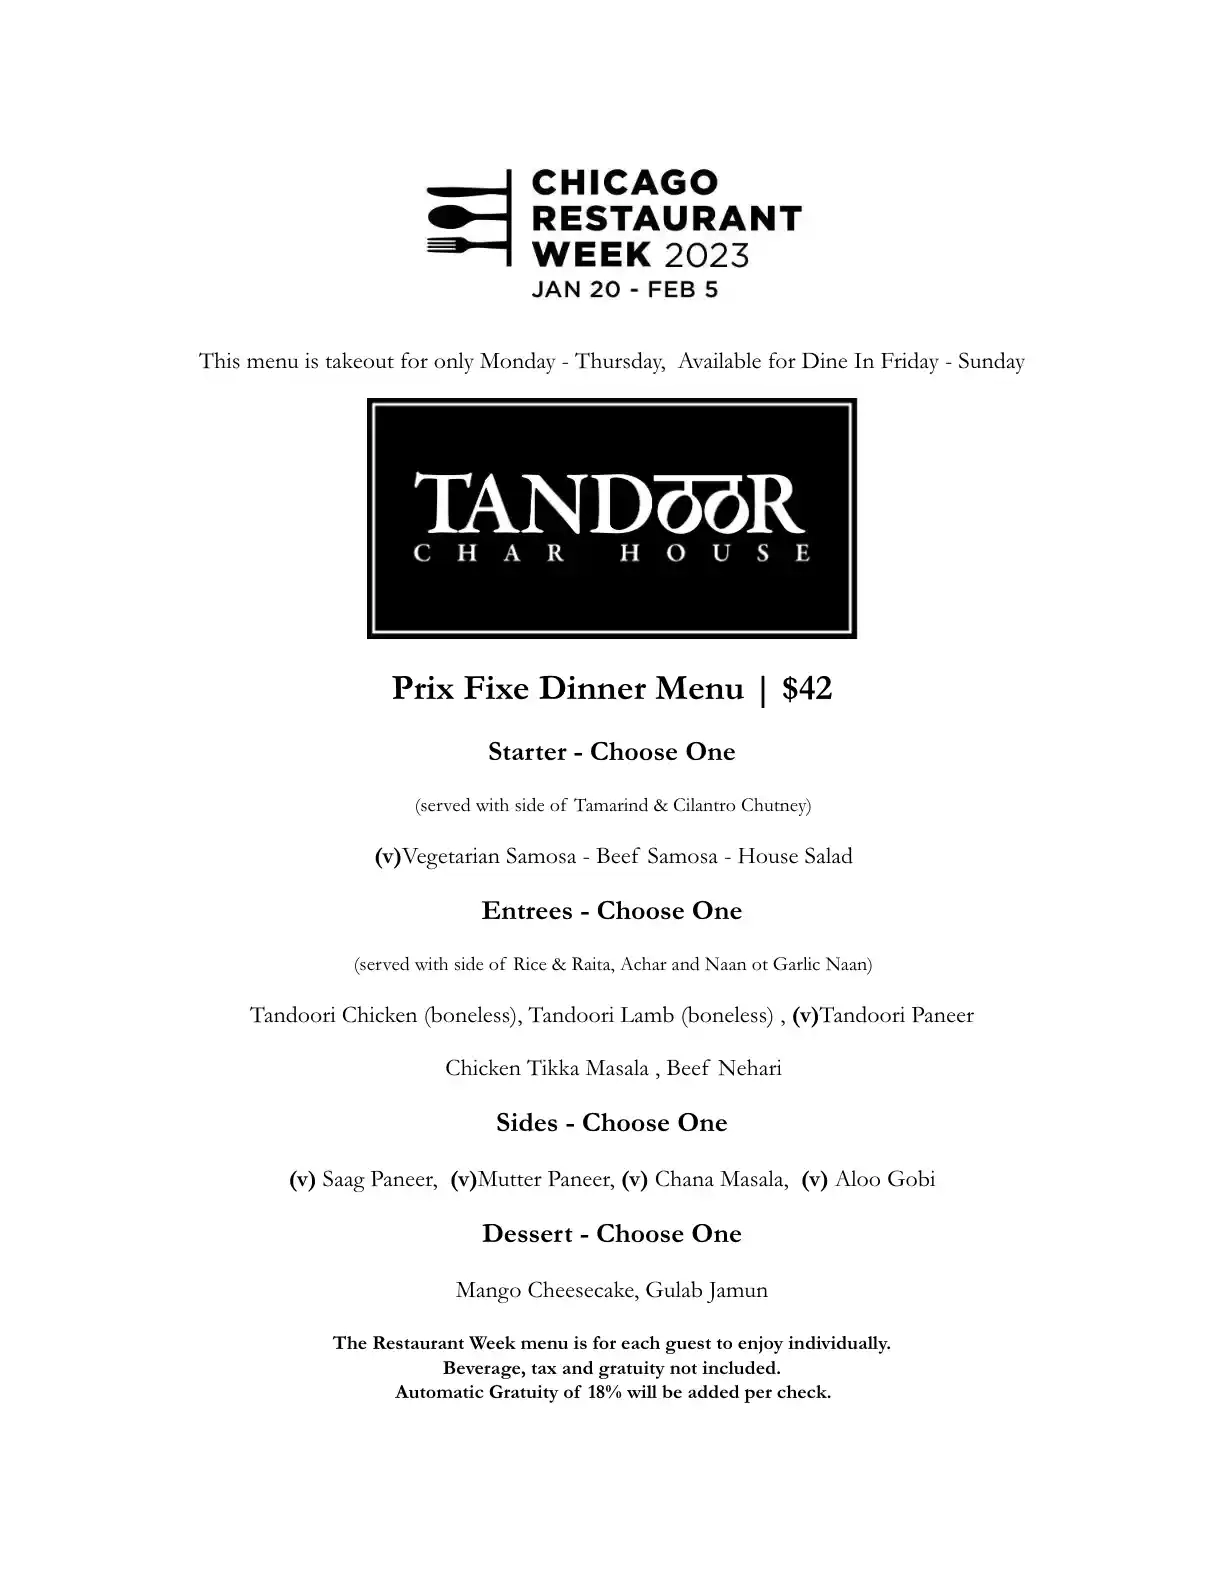 Chicago Restaurant Week 2023 Menu Tandoor Char House